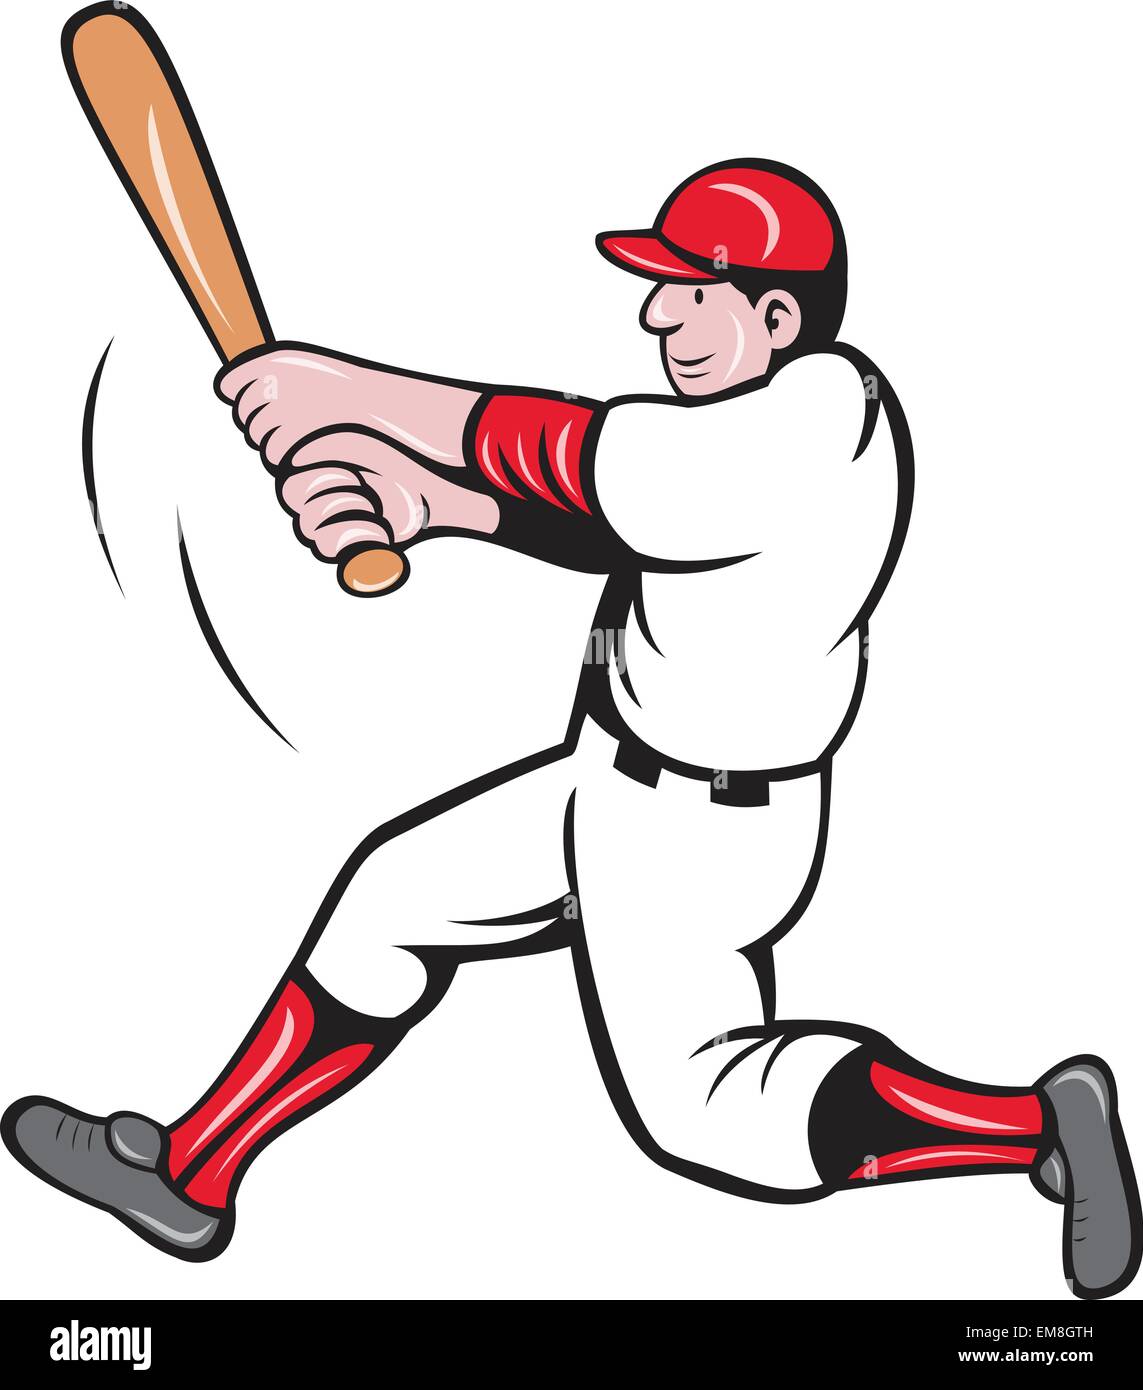 baseball player batting cartoon style Stock Vector Image & Art   Alamy